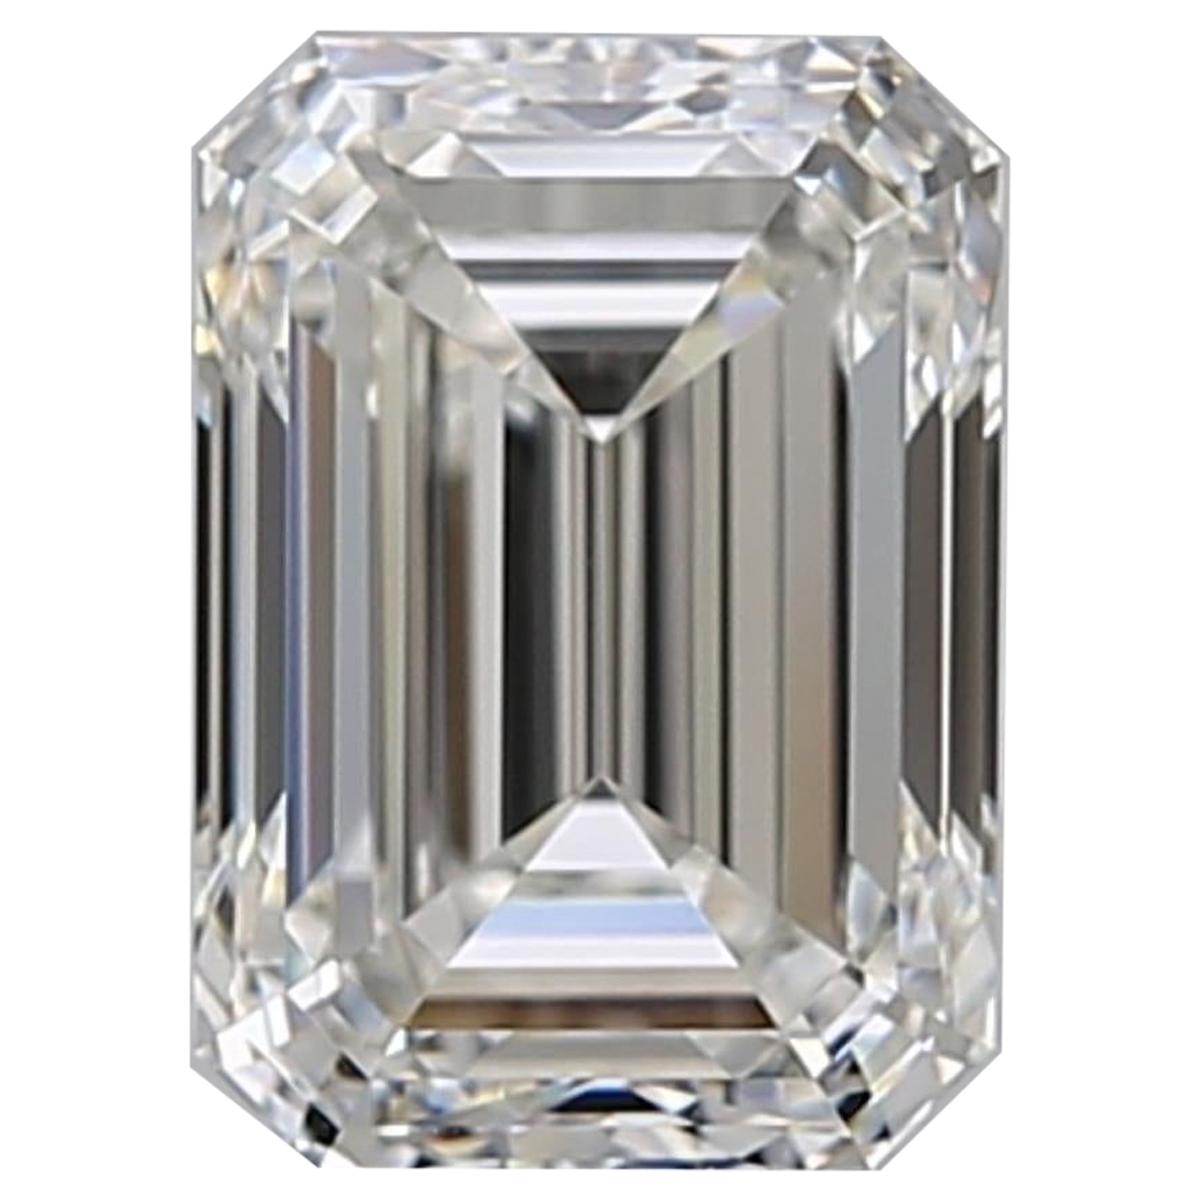 GIA Certified 2.01 Carat Loose Diamond G Color VVS2 Clarity For Sale